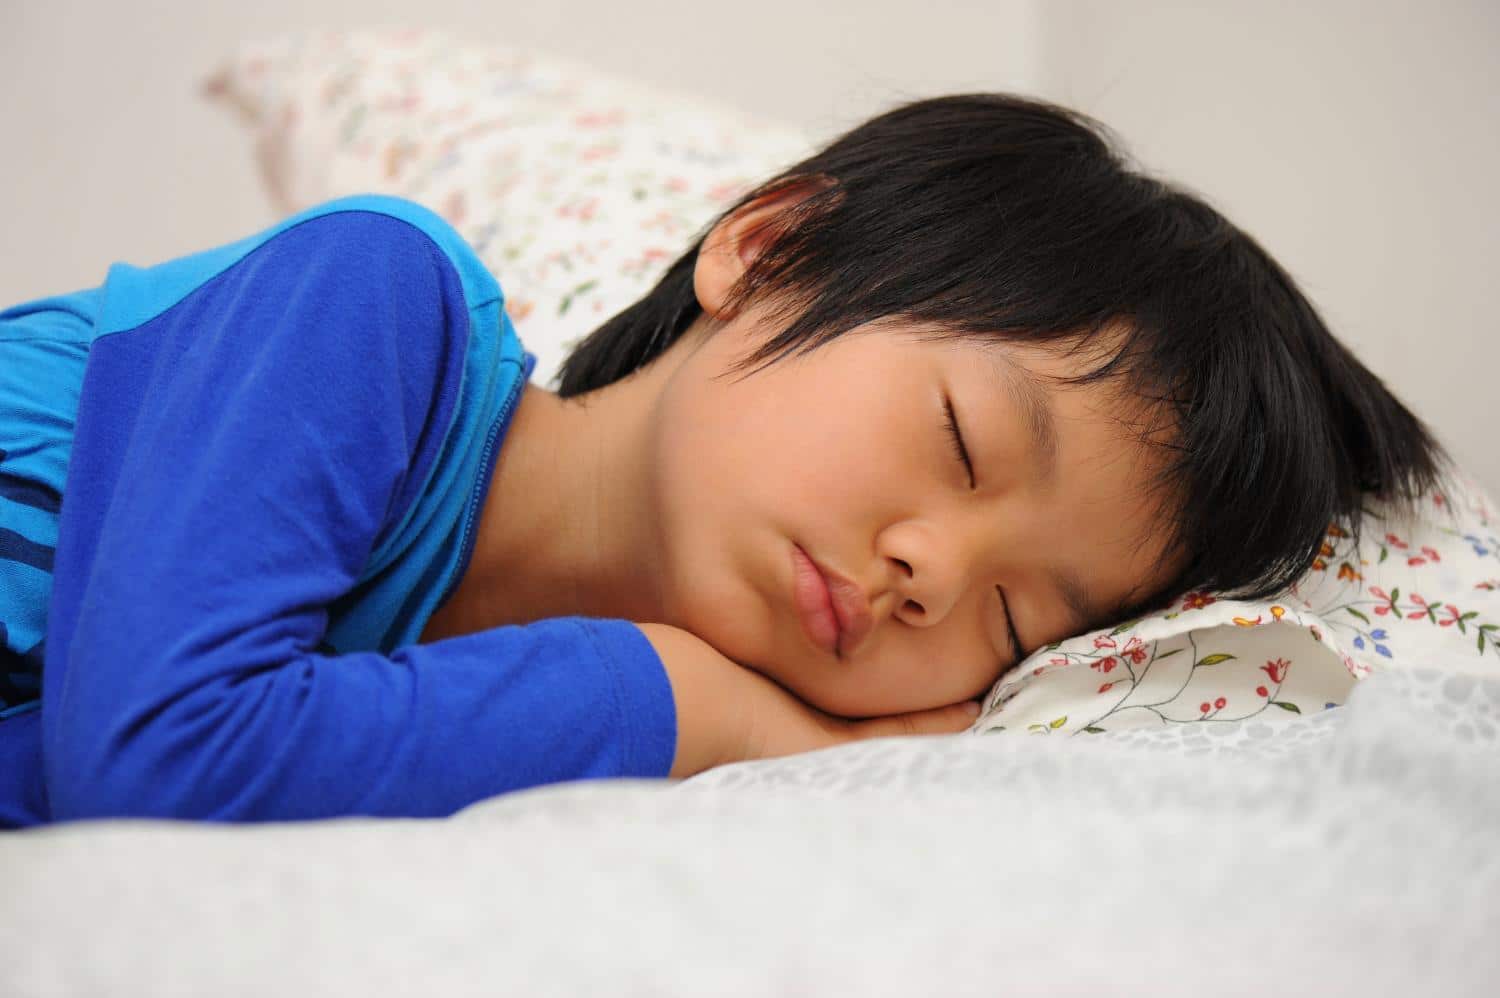 Letting Kids Fall Asleep In Living Room